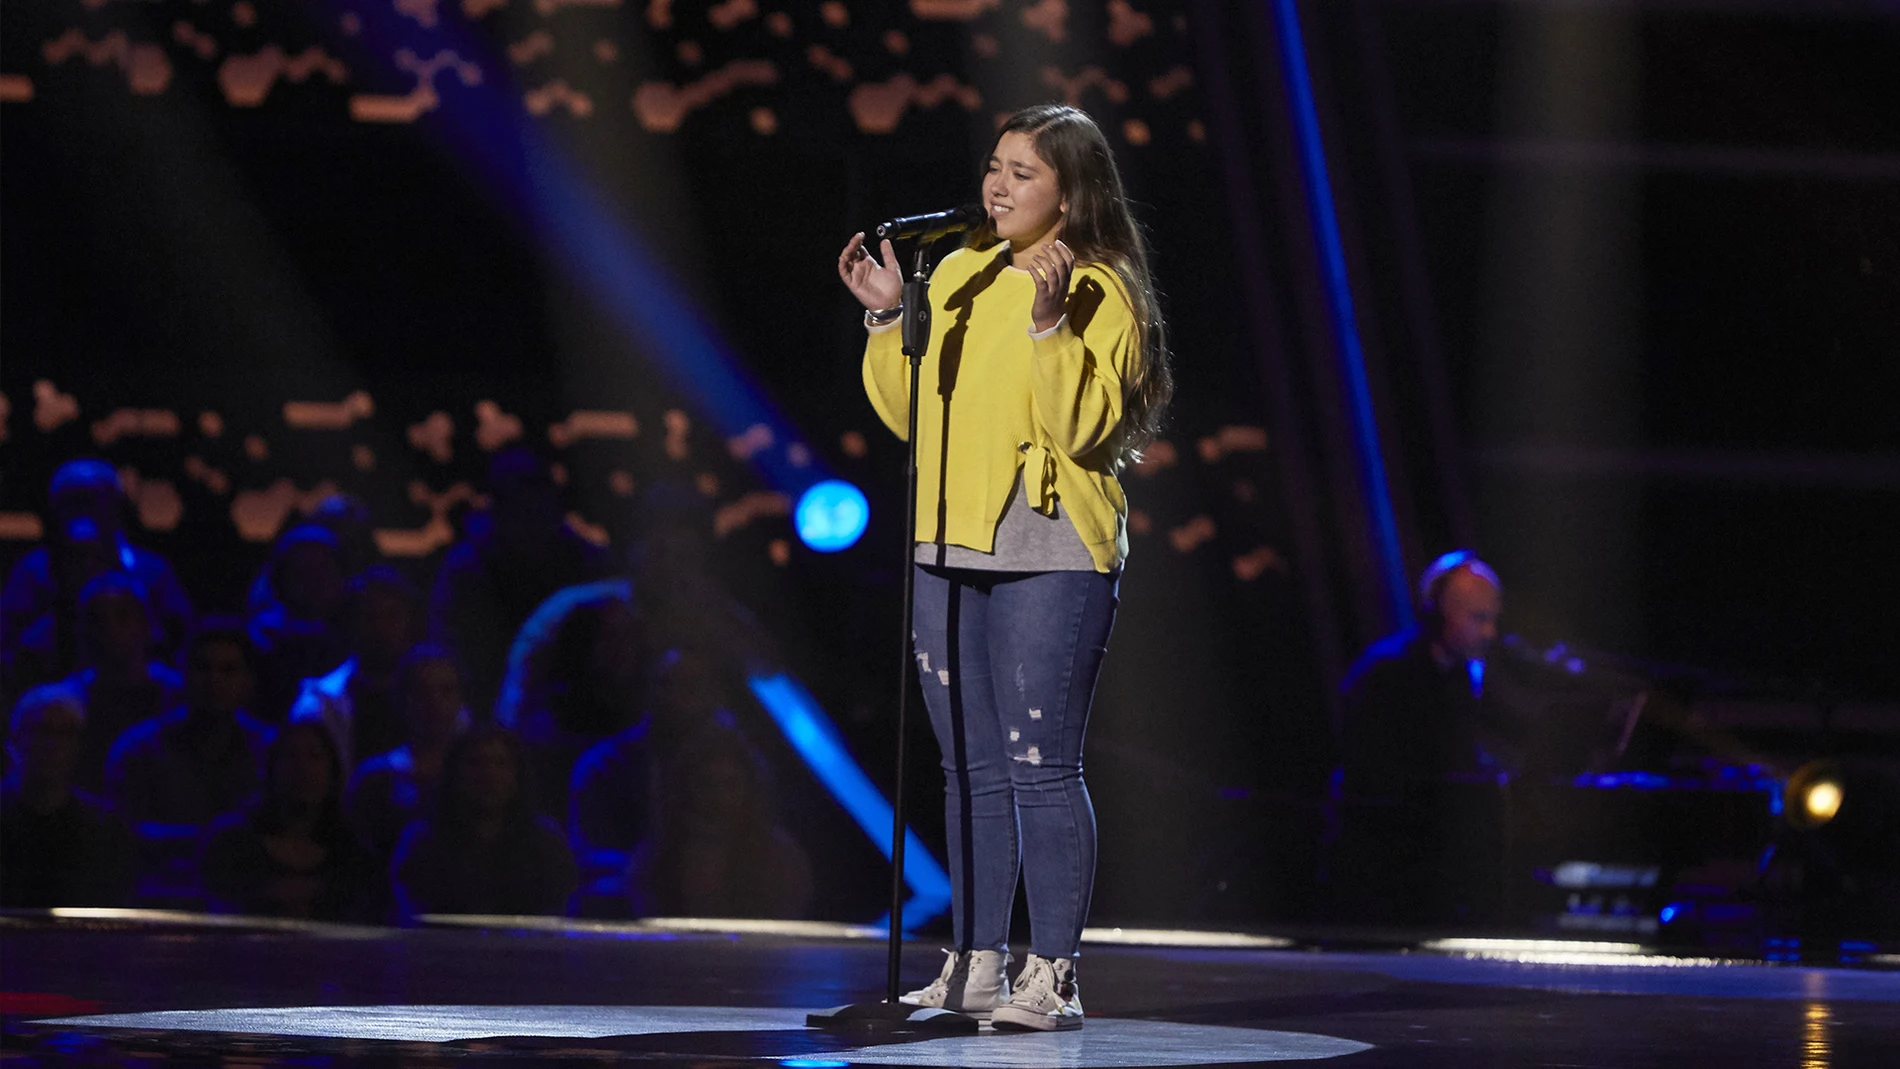 Rocío Avilés canta ‘No te pude retener’ en las Audiciones a ciegas de ‘La Voz Kids’